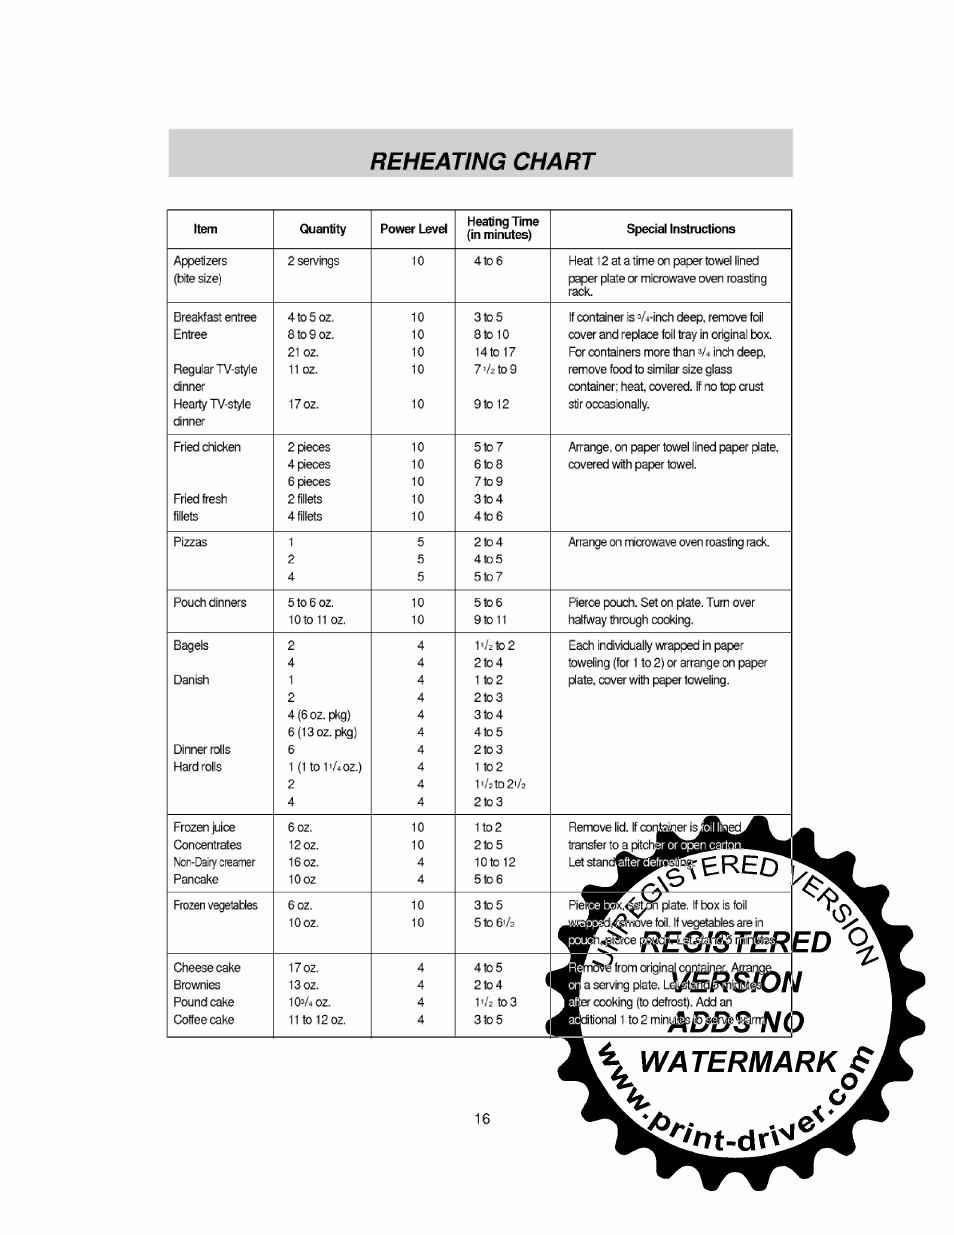 Reheating chart, Watermark si | LG MS-0745V User Manual | Page 16 / 19